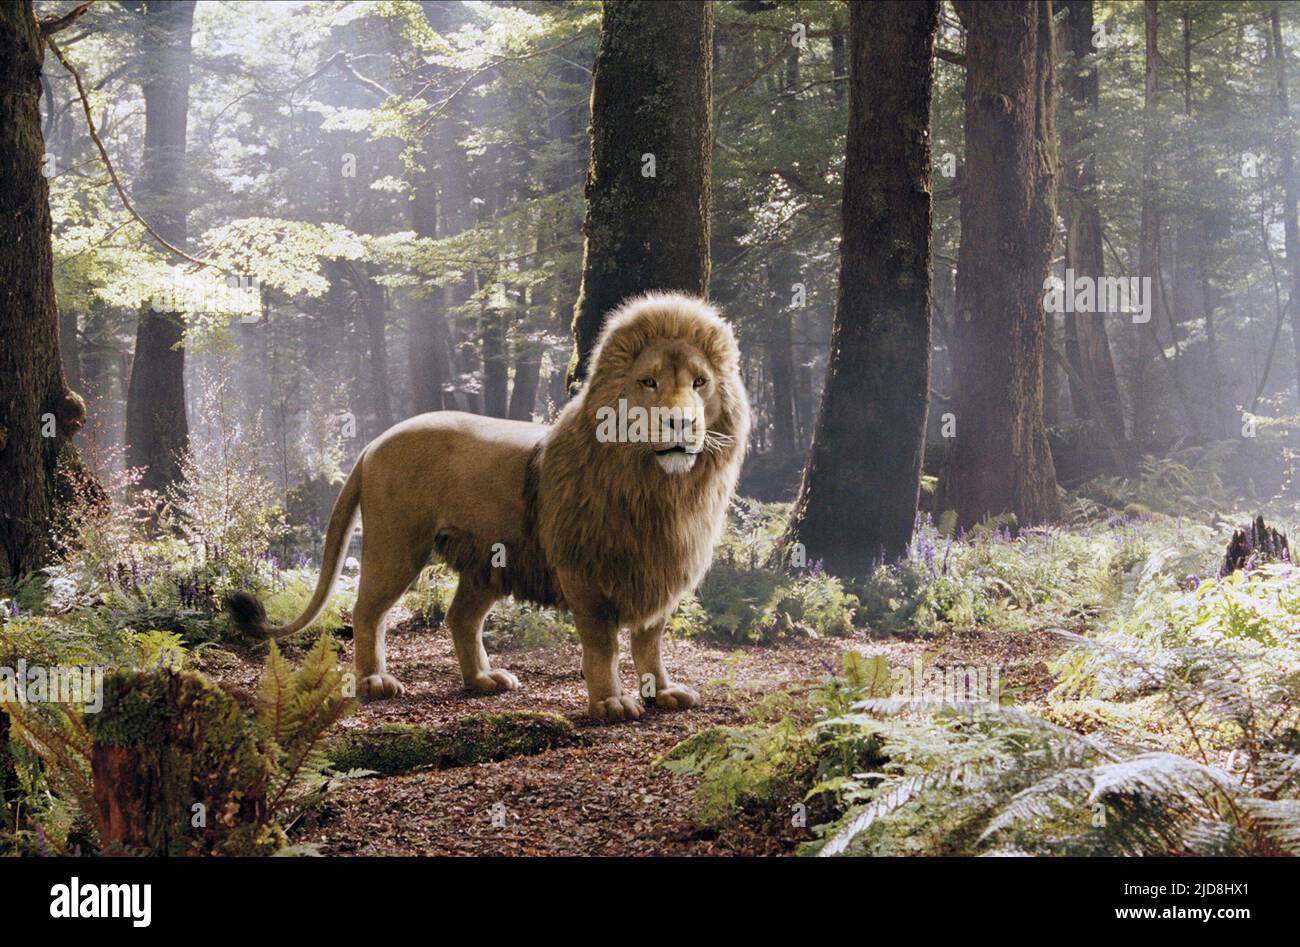 File:Narnia aslan.jpg - Wikimedia Commons